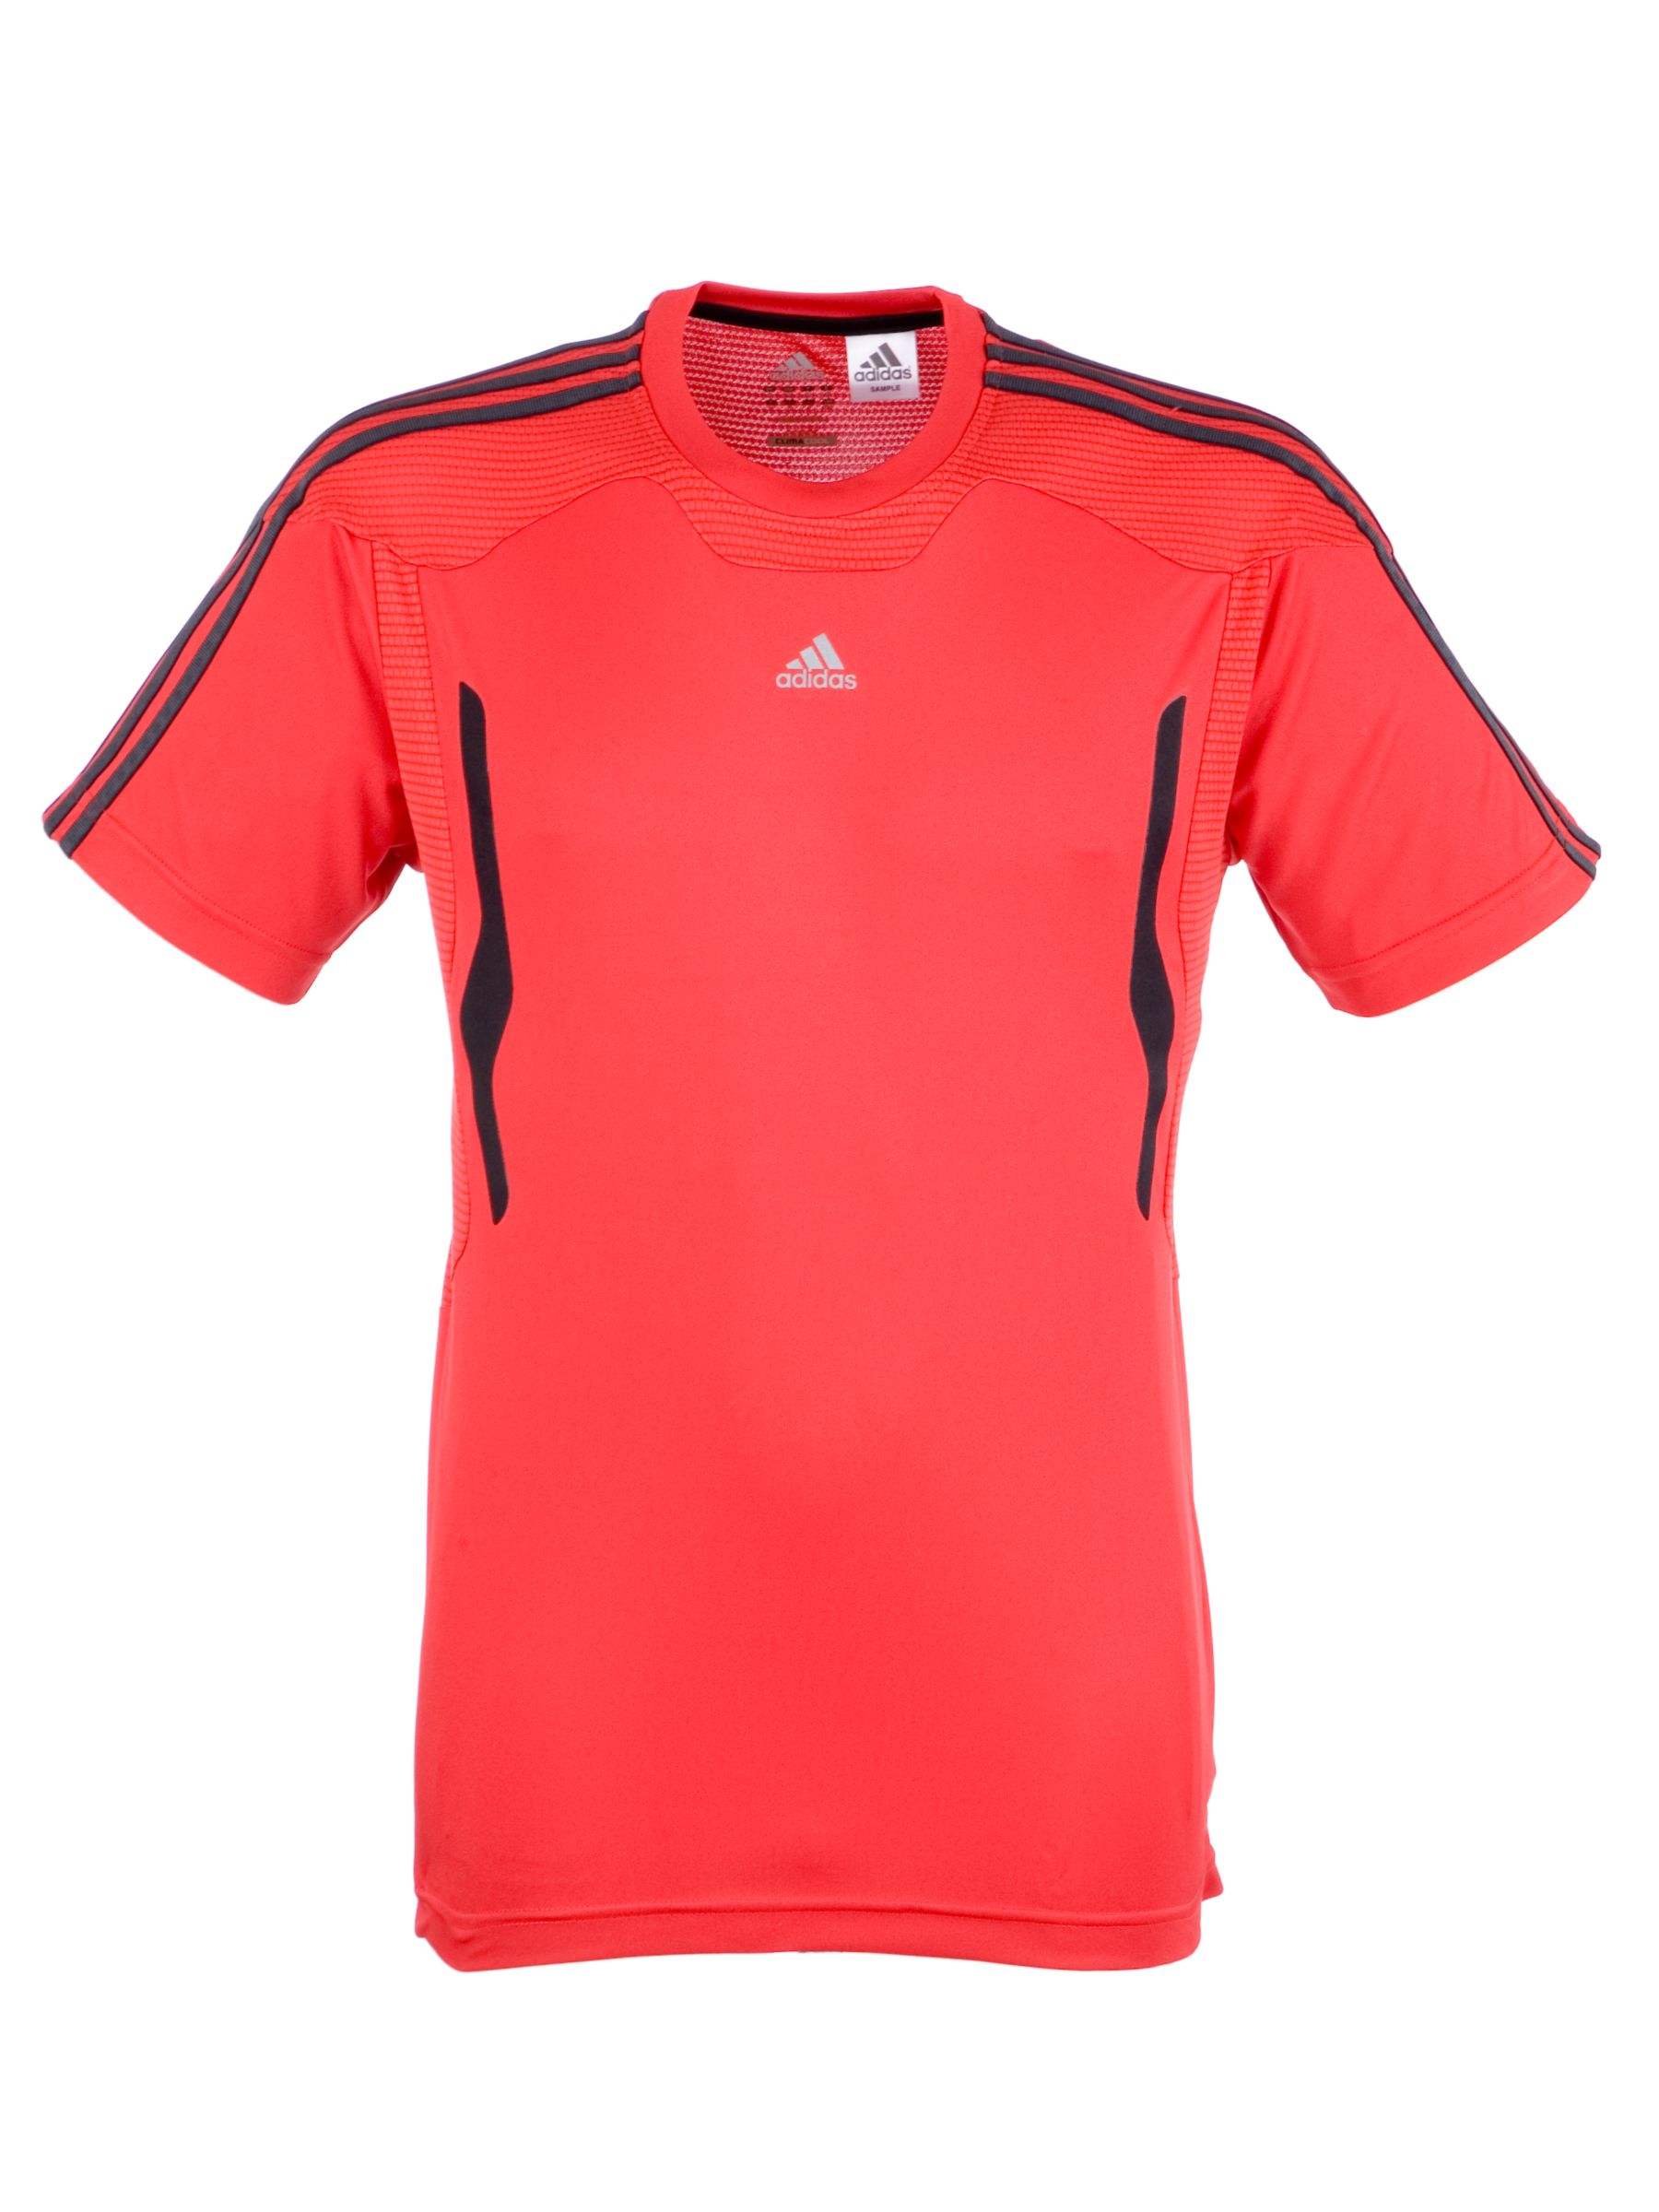 Adidas Clima 365 Short Sleeve T-Shirt, Red